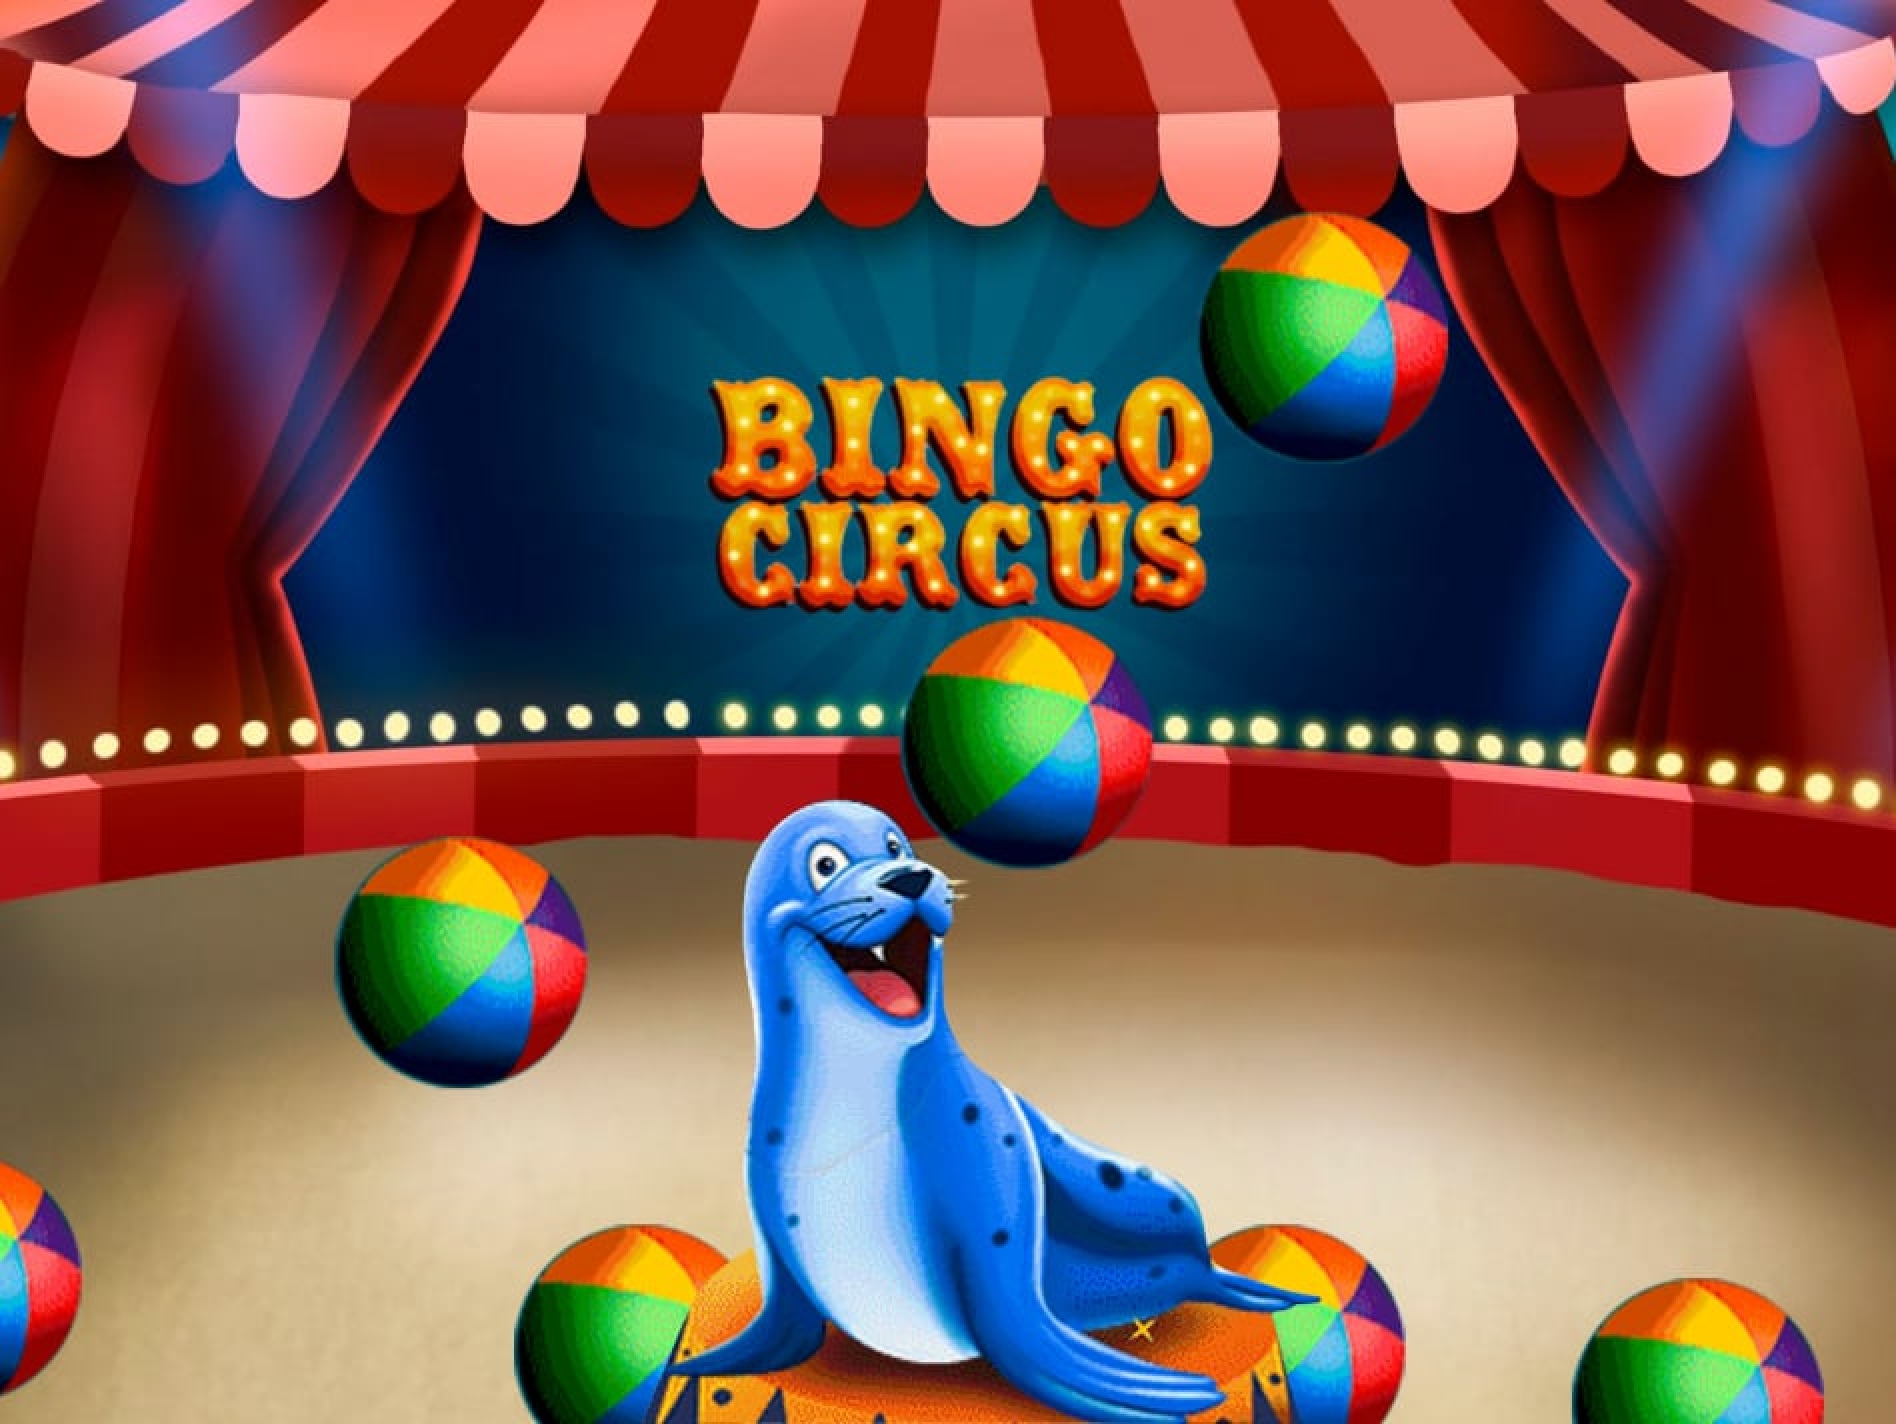 Bingo Circus demo